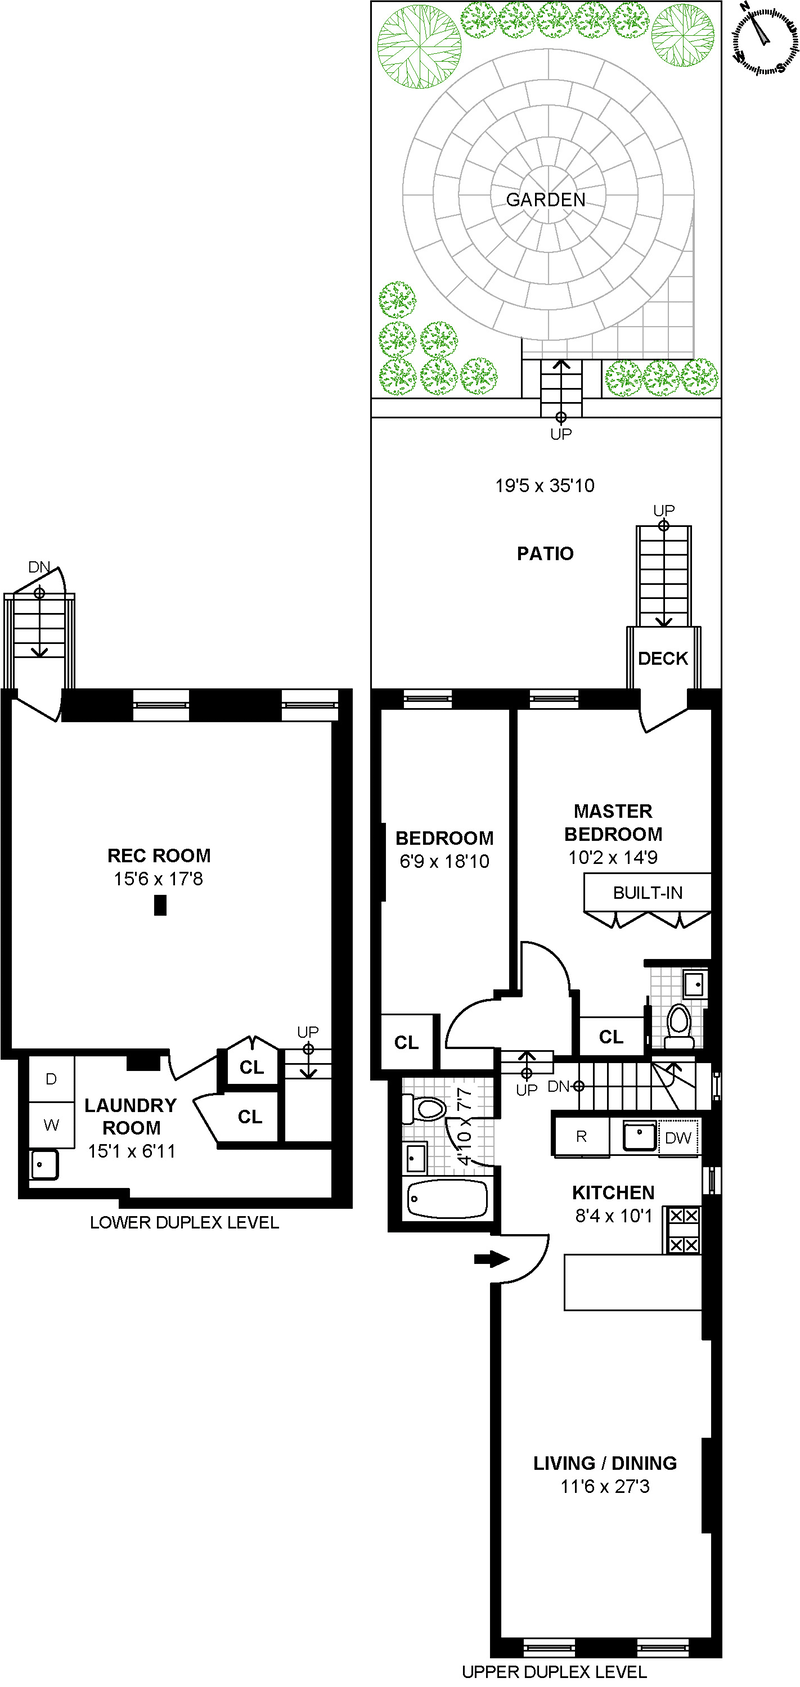 Floorplan for 445, 1st Street, 1